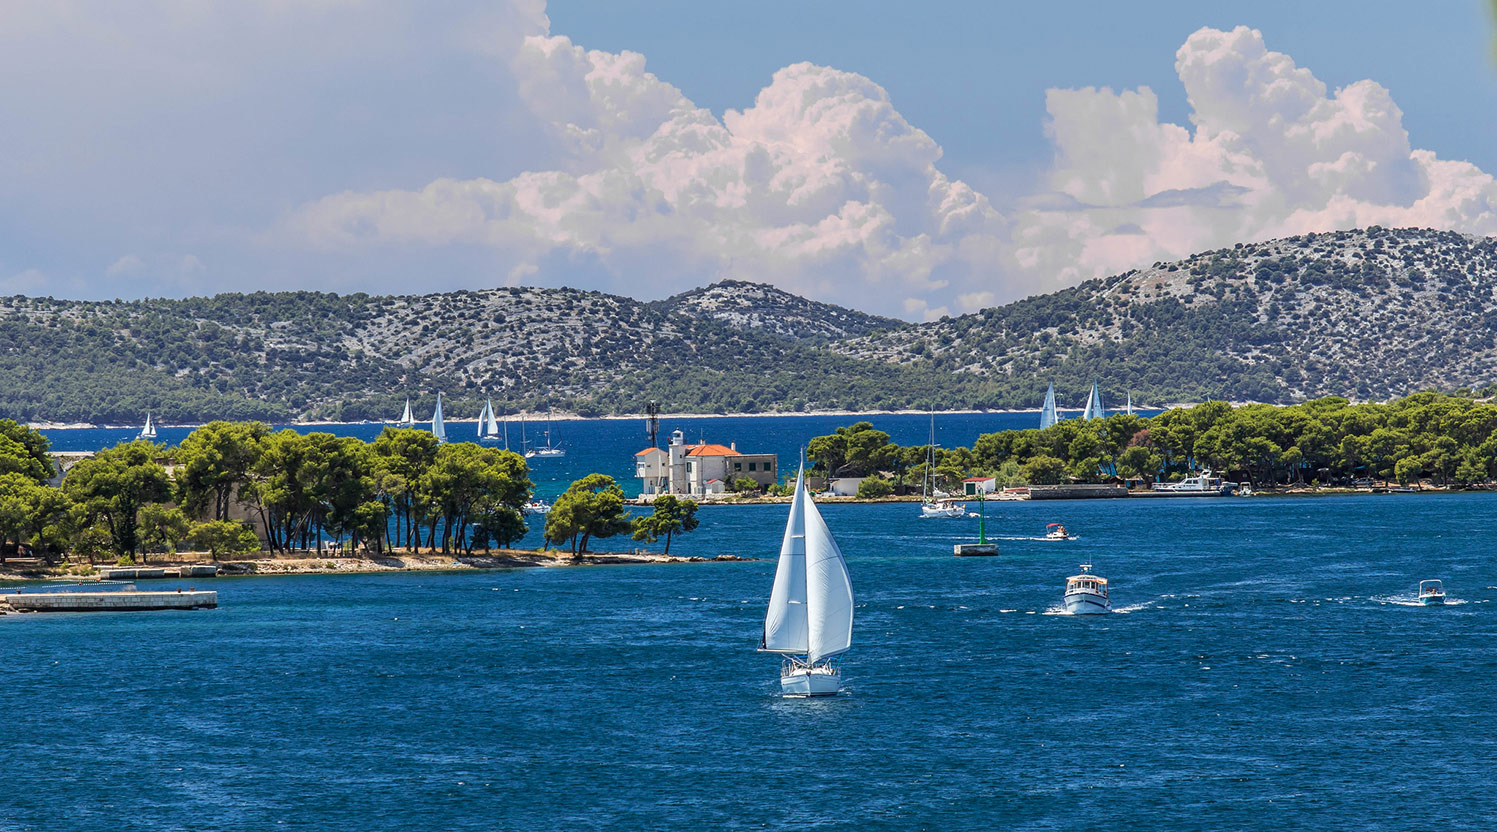 Croatia Sailing Holidays